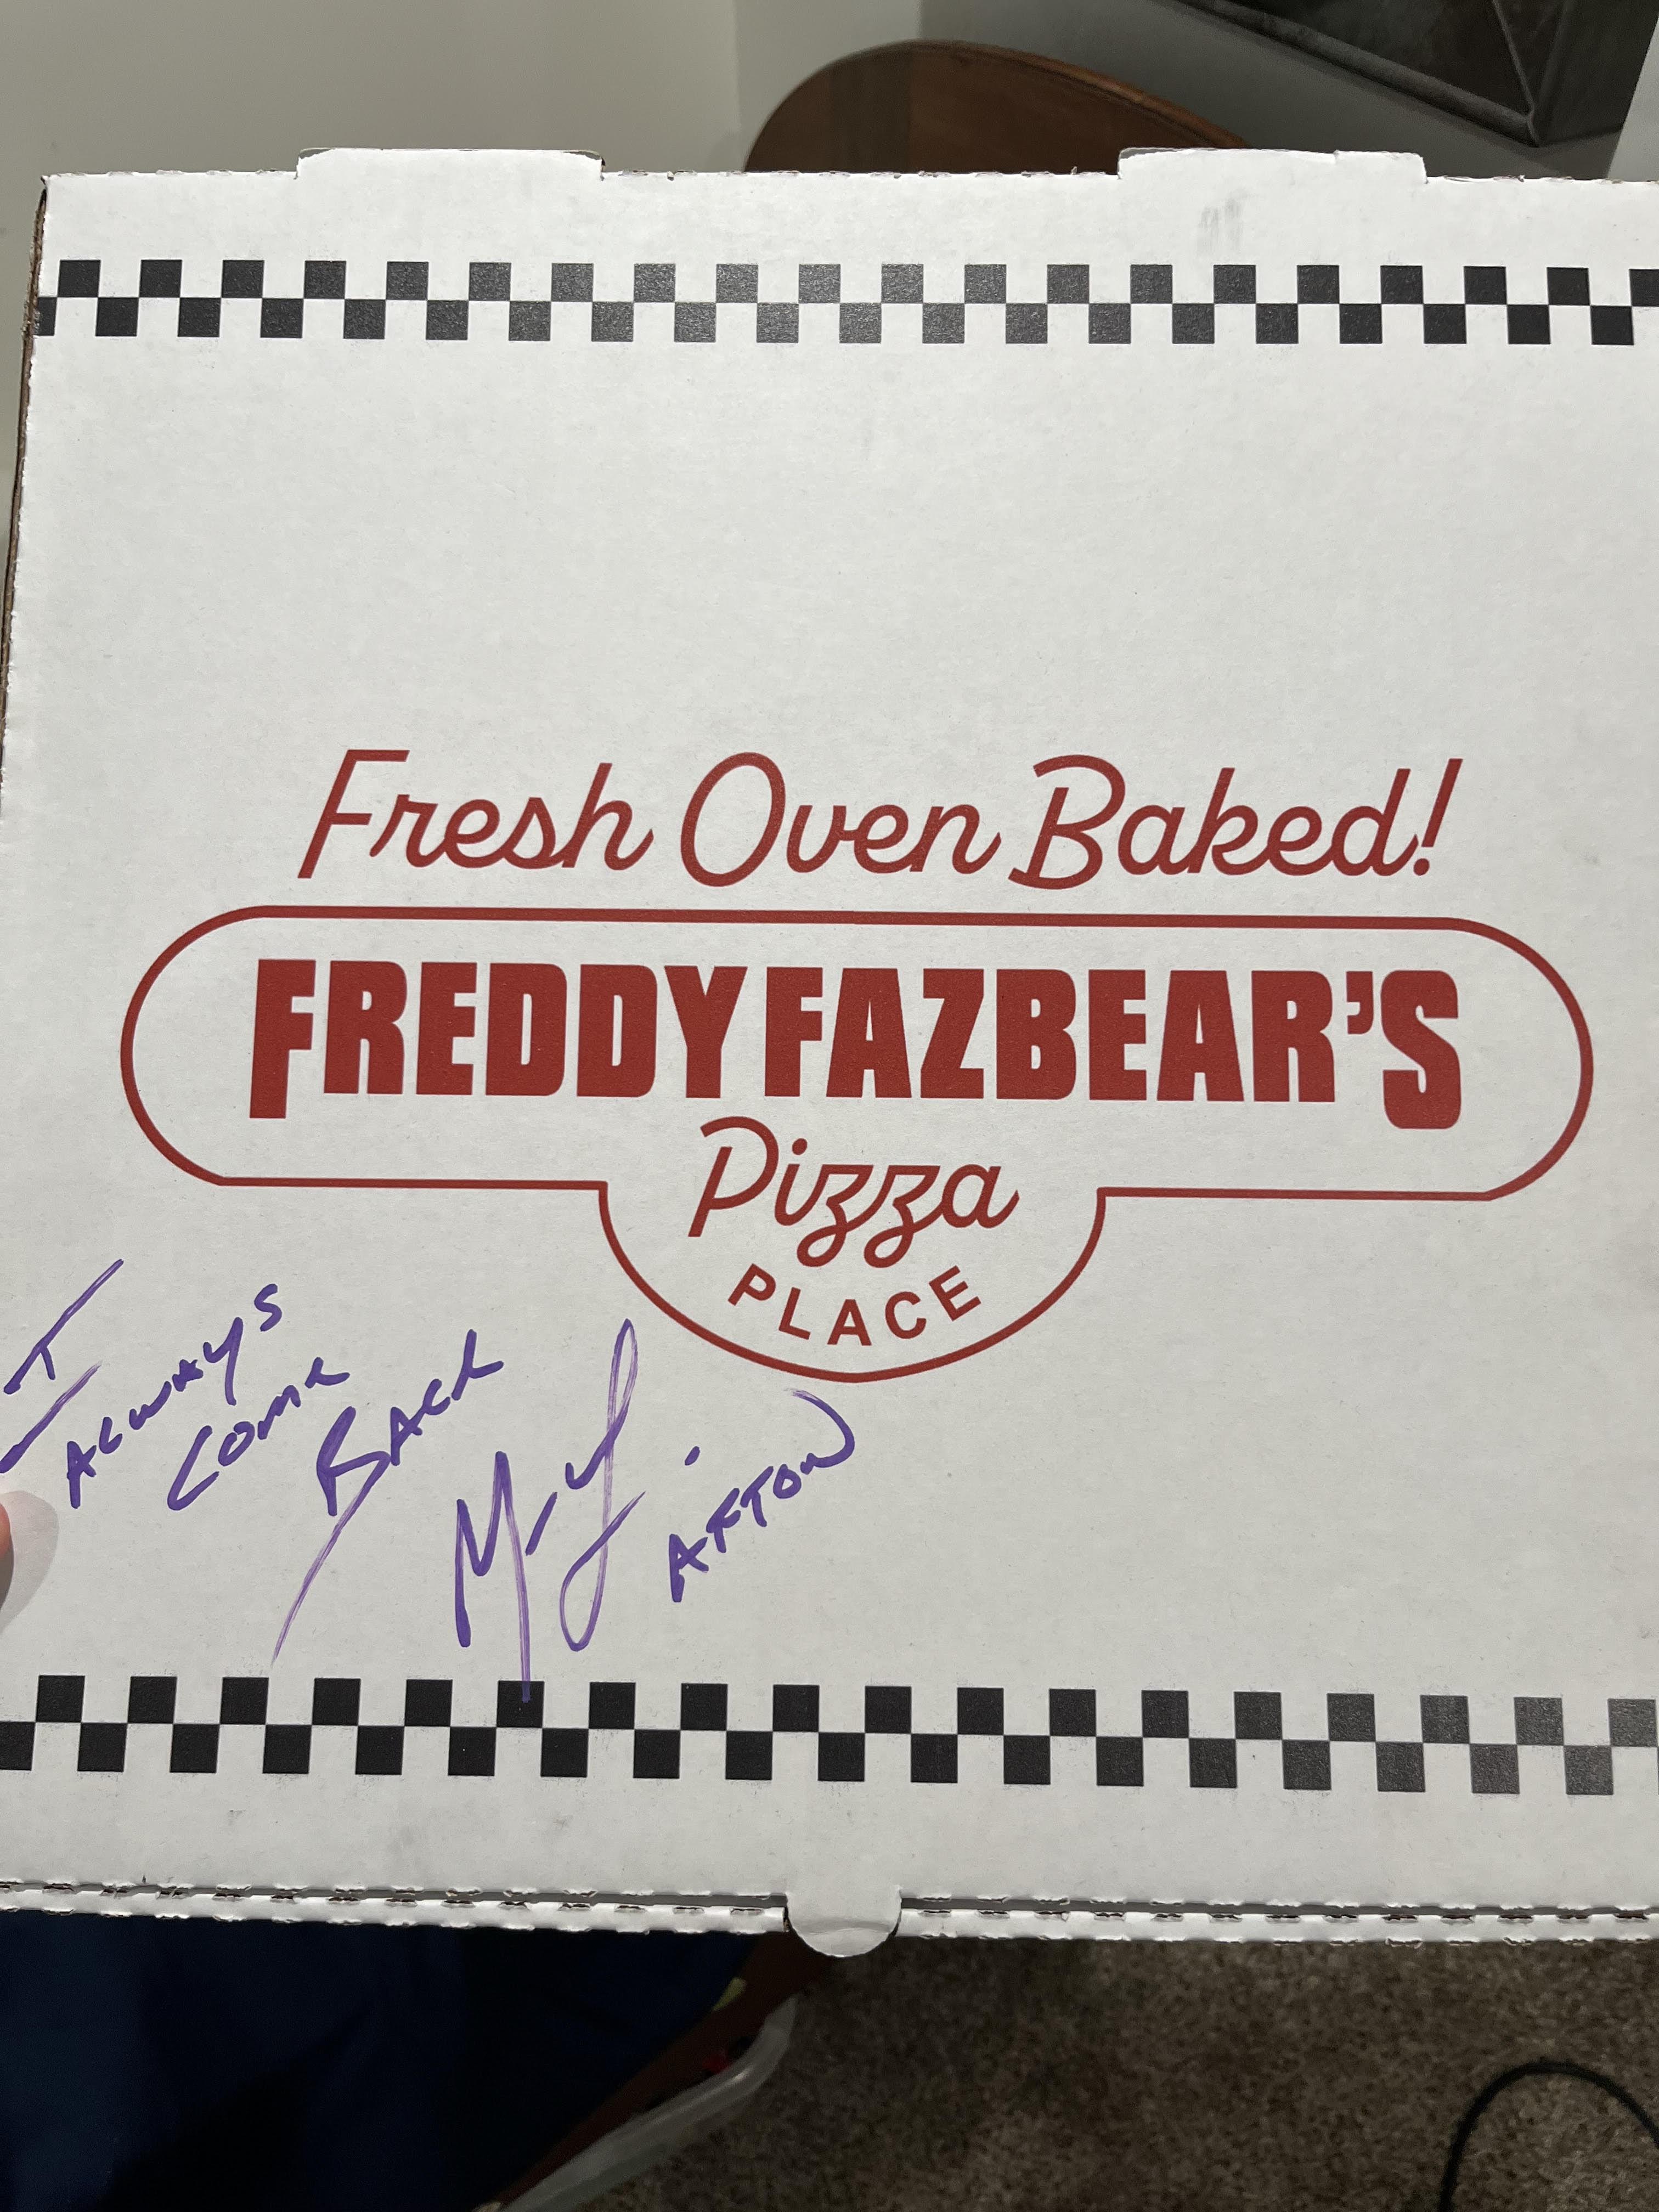 fnaf pizza box